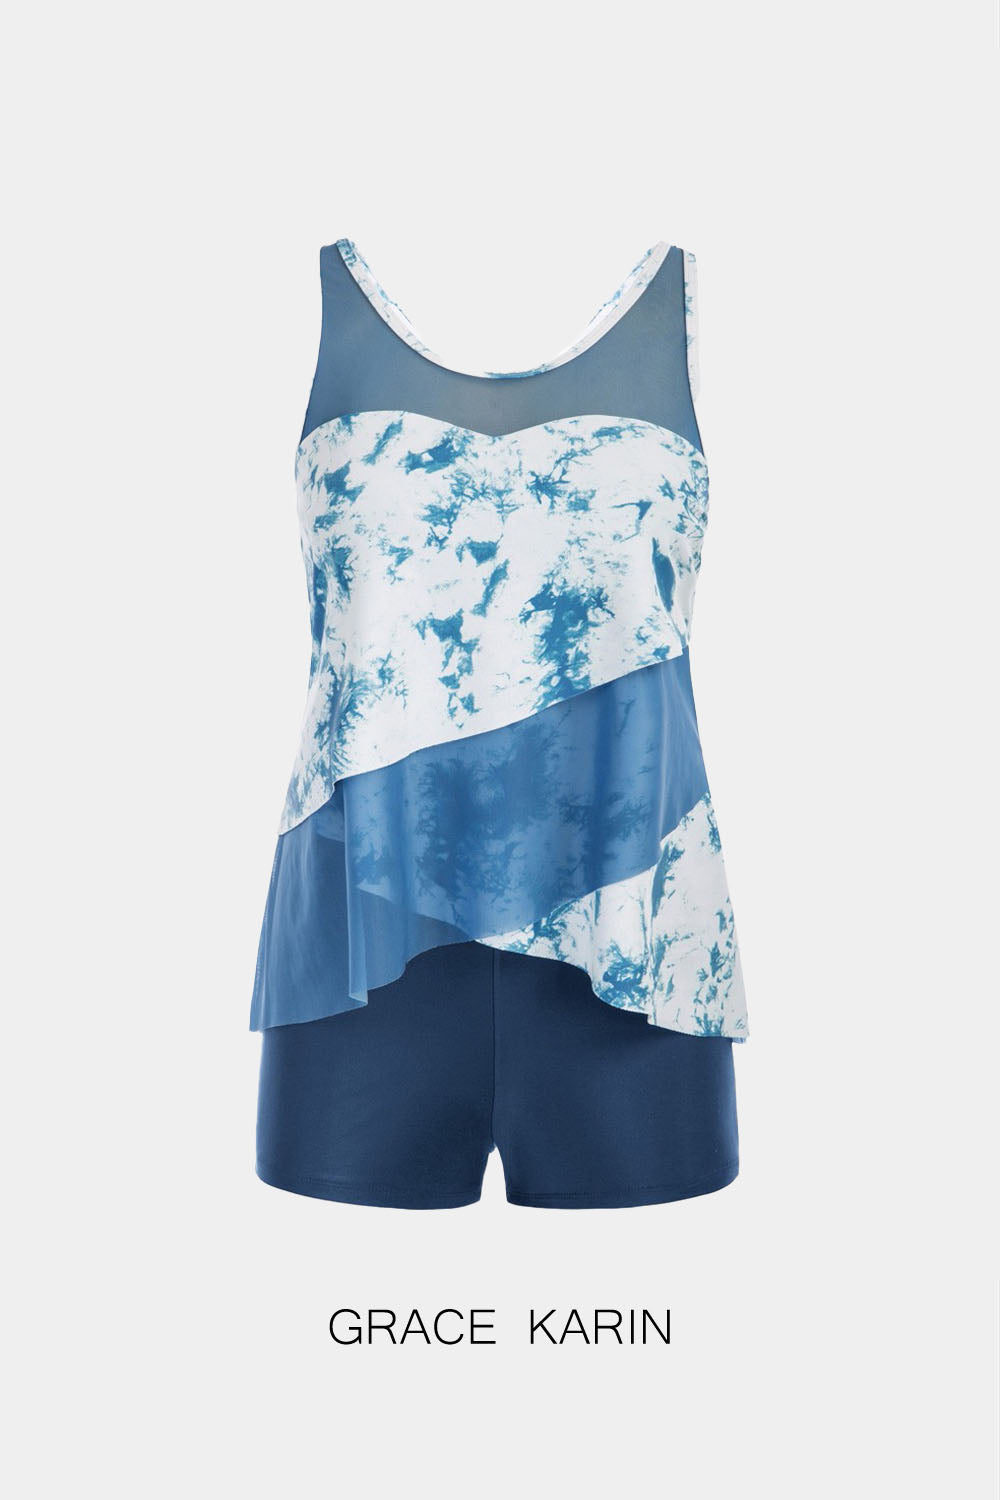 【Only $9.99】GRACE KARIN 2pcs Set Patchwork Swimsuit